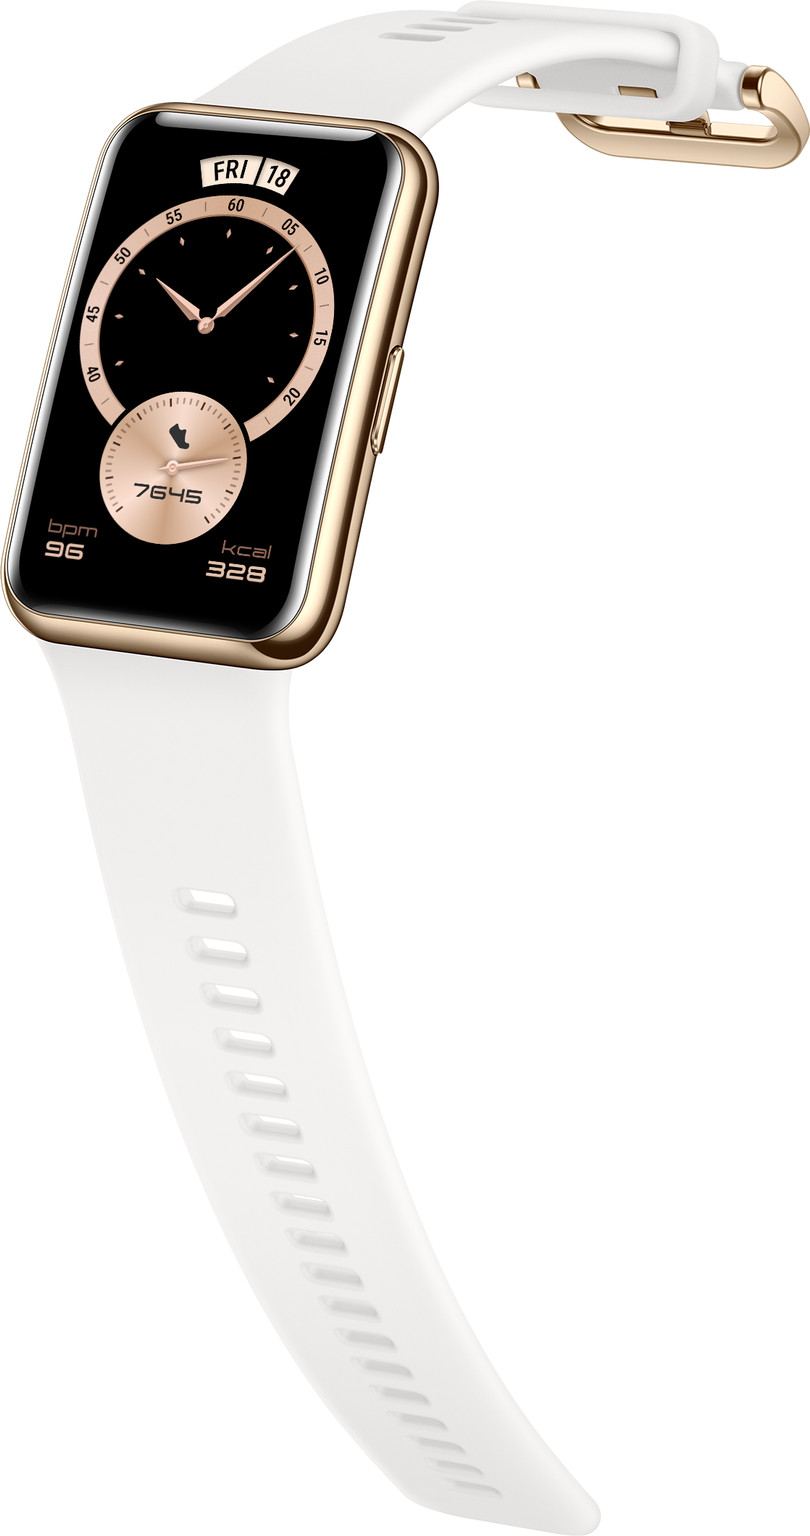 Huawei Watch Fit Elegant